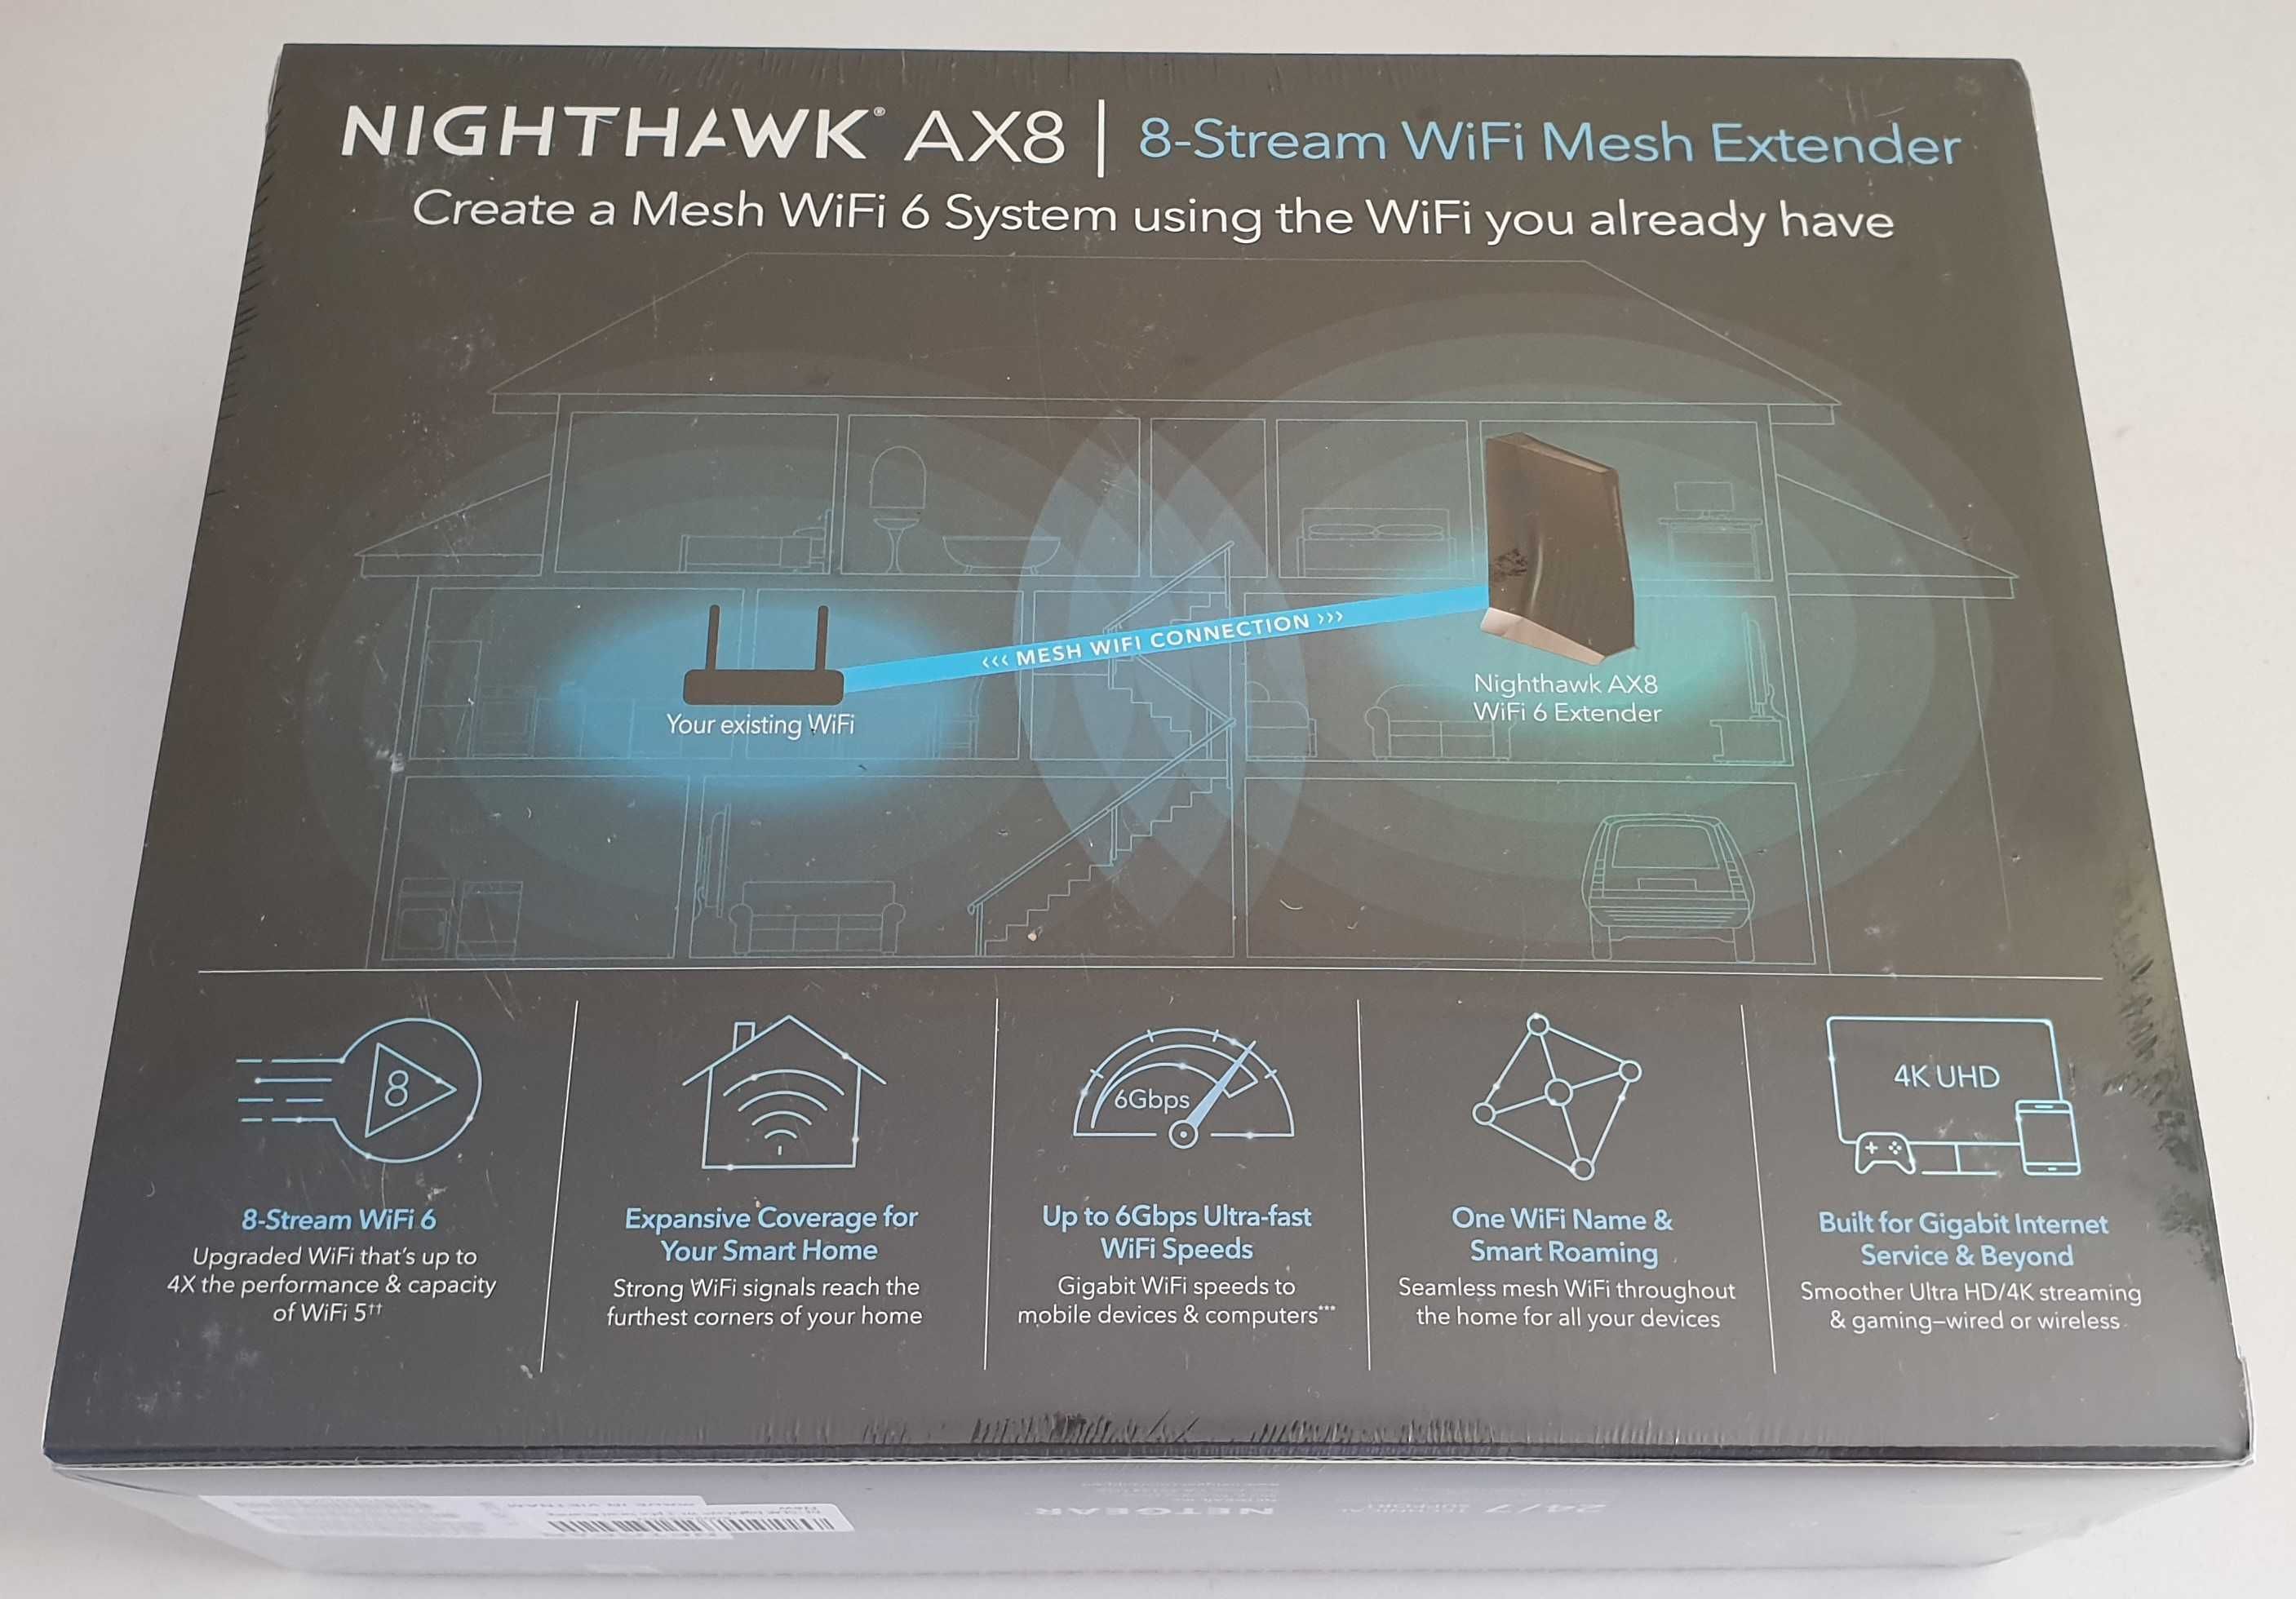 Netgear Nighthawk EAX80 WiFi Extender